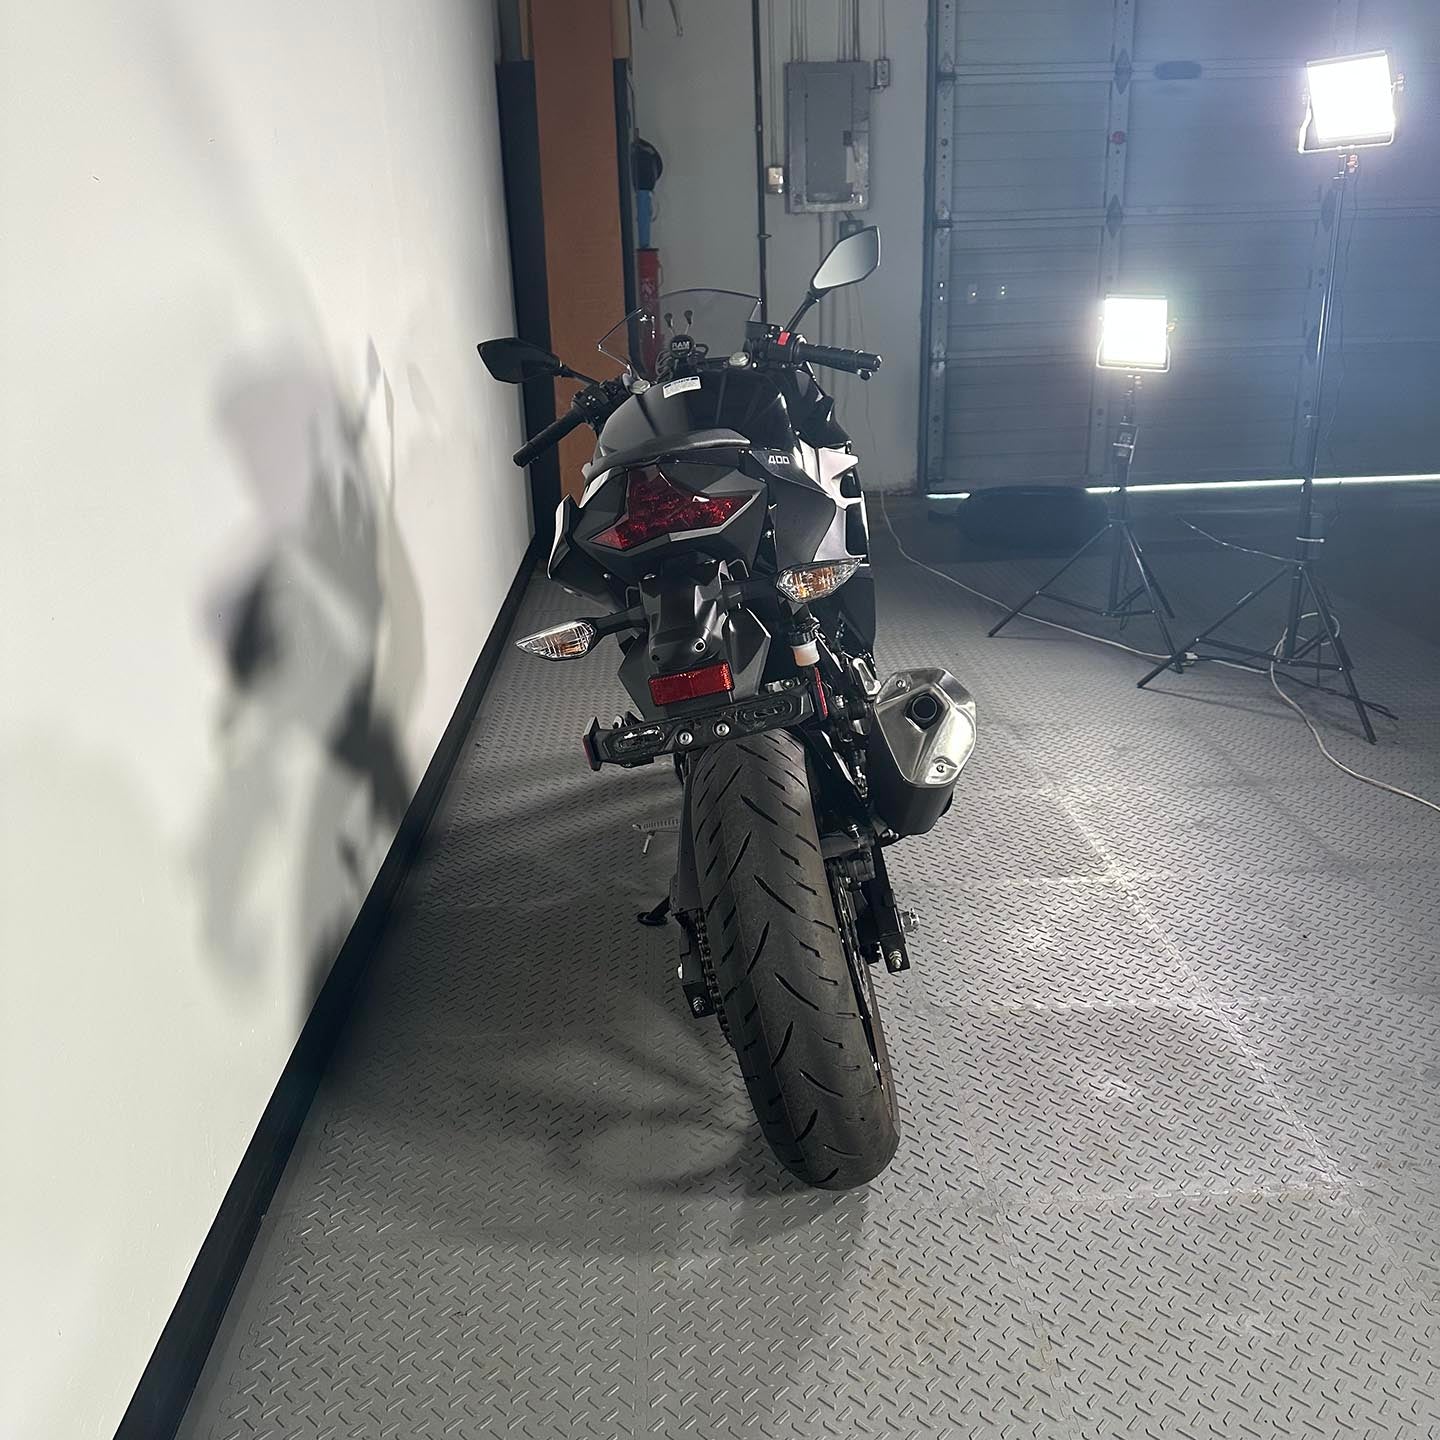 2018 Kawasaki Ninja 400 Abs (21 Miles)